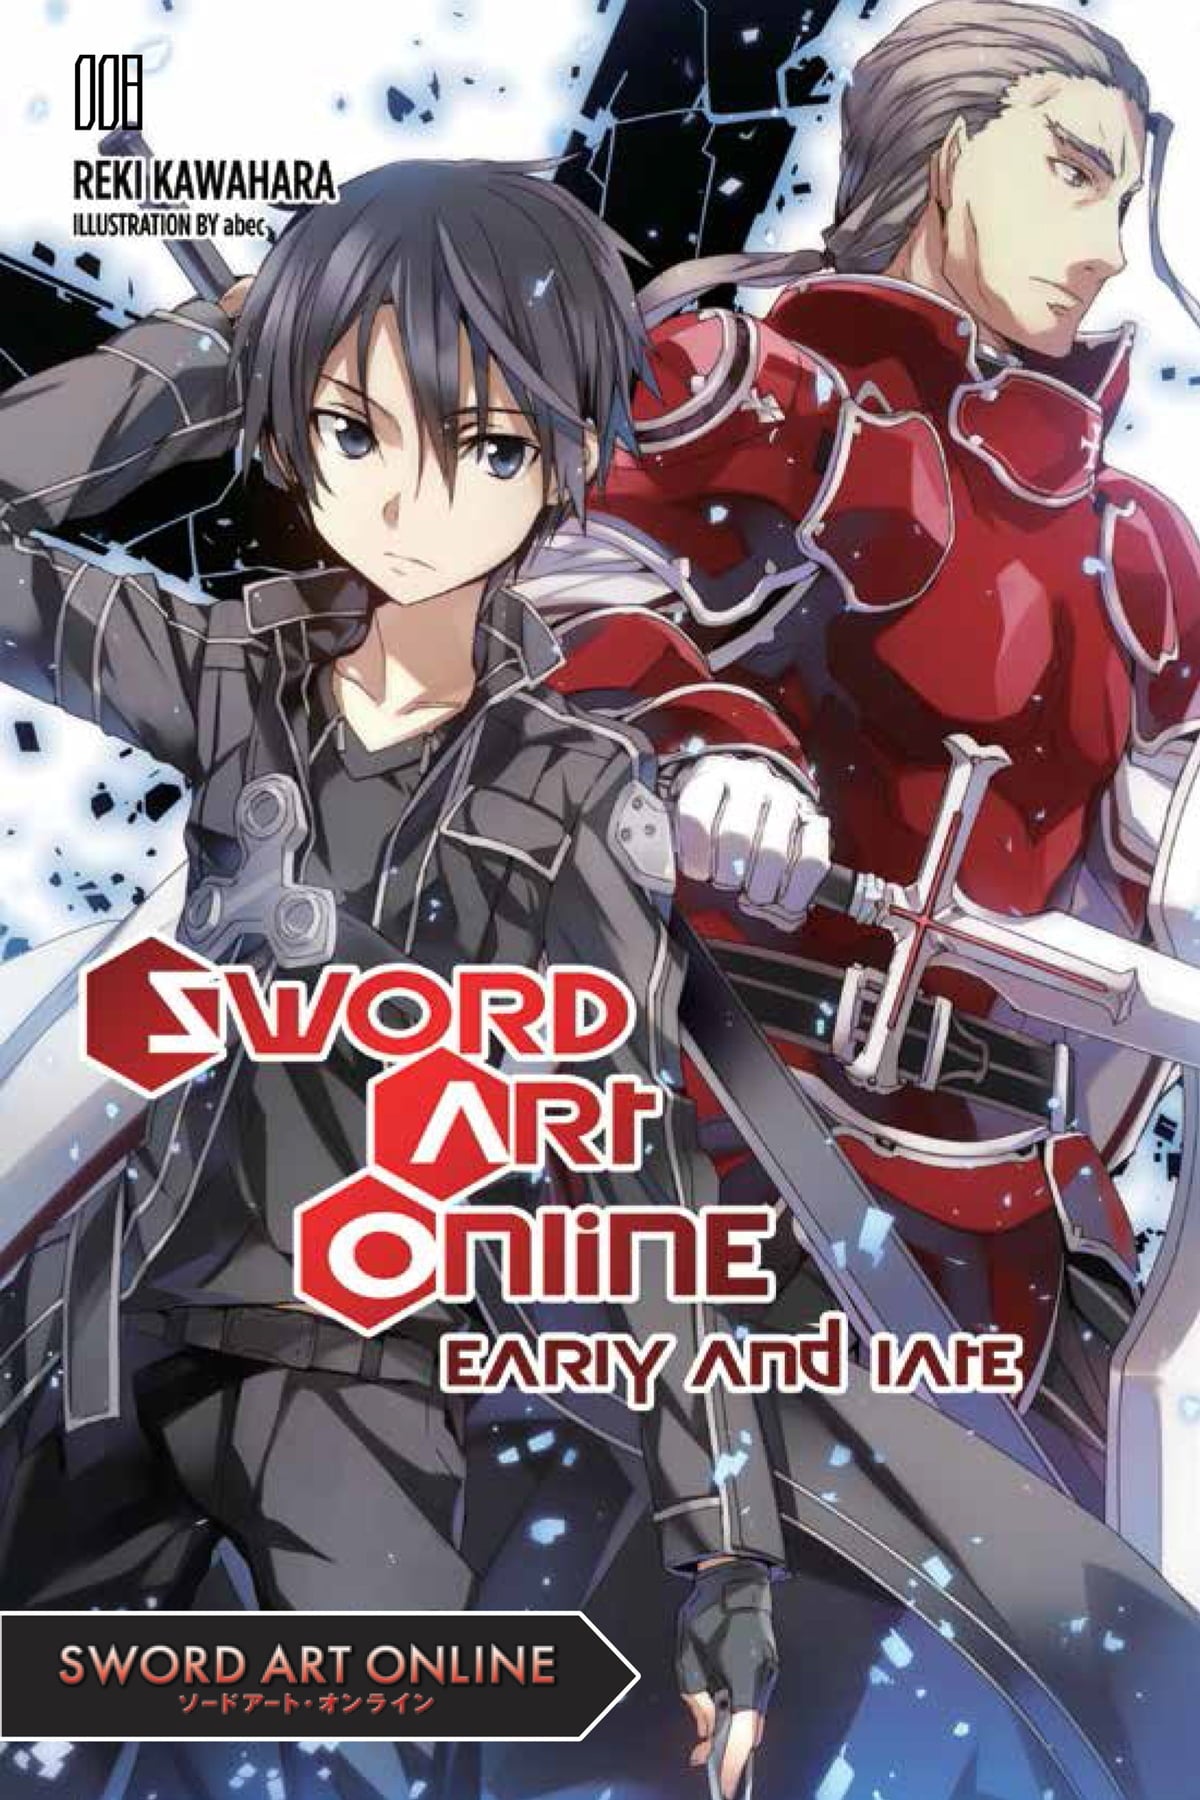 Sword Art Online Progressive, Vol. 2 (manga) by Reki Kawahara